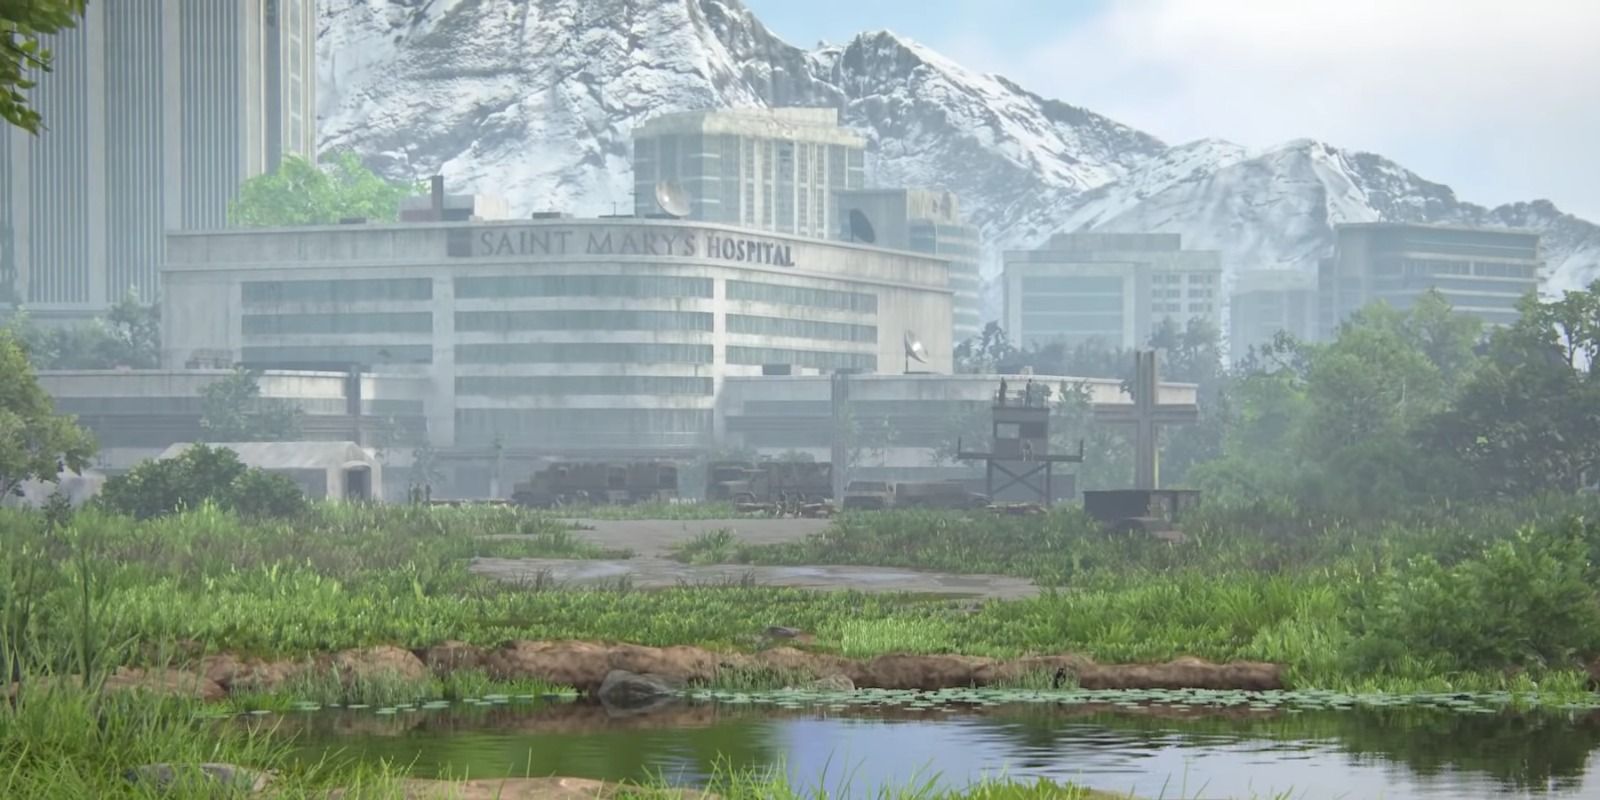 Saint Mary's Hospital in The Last of Us II